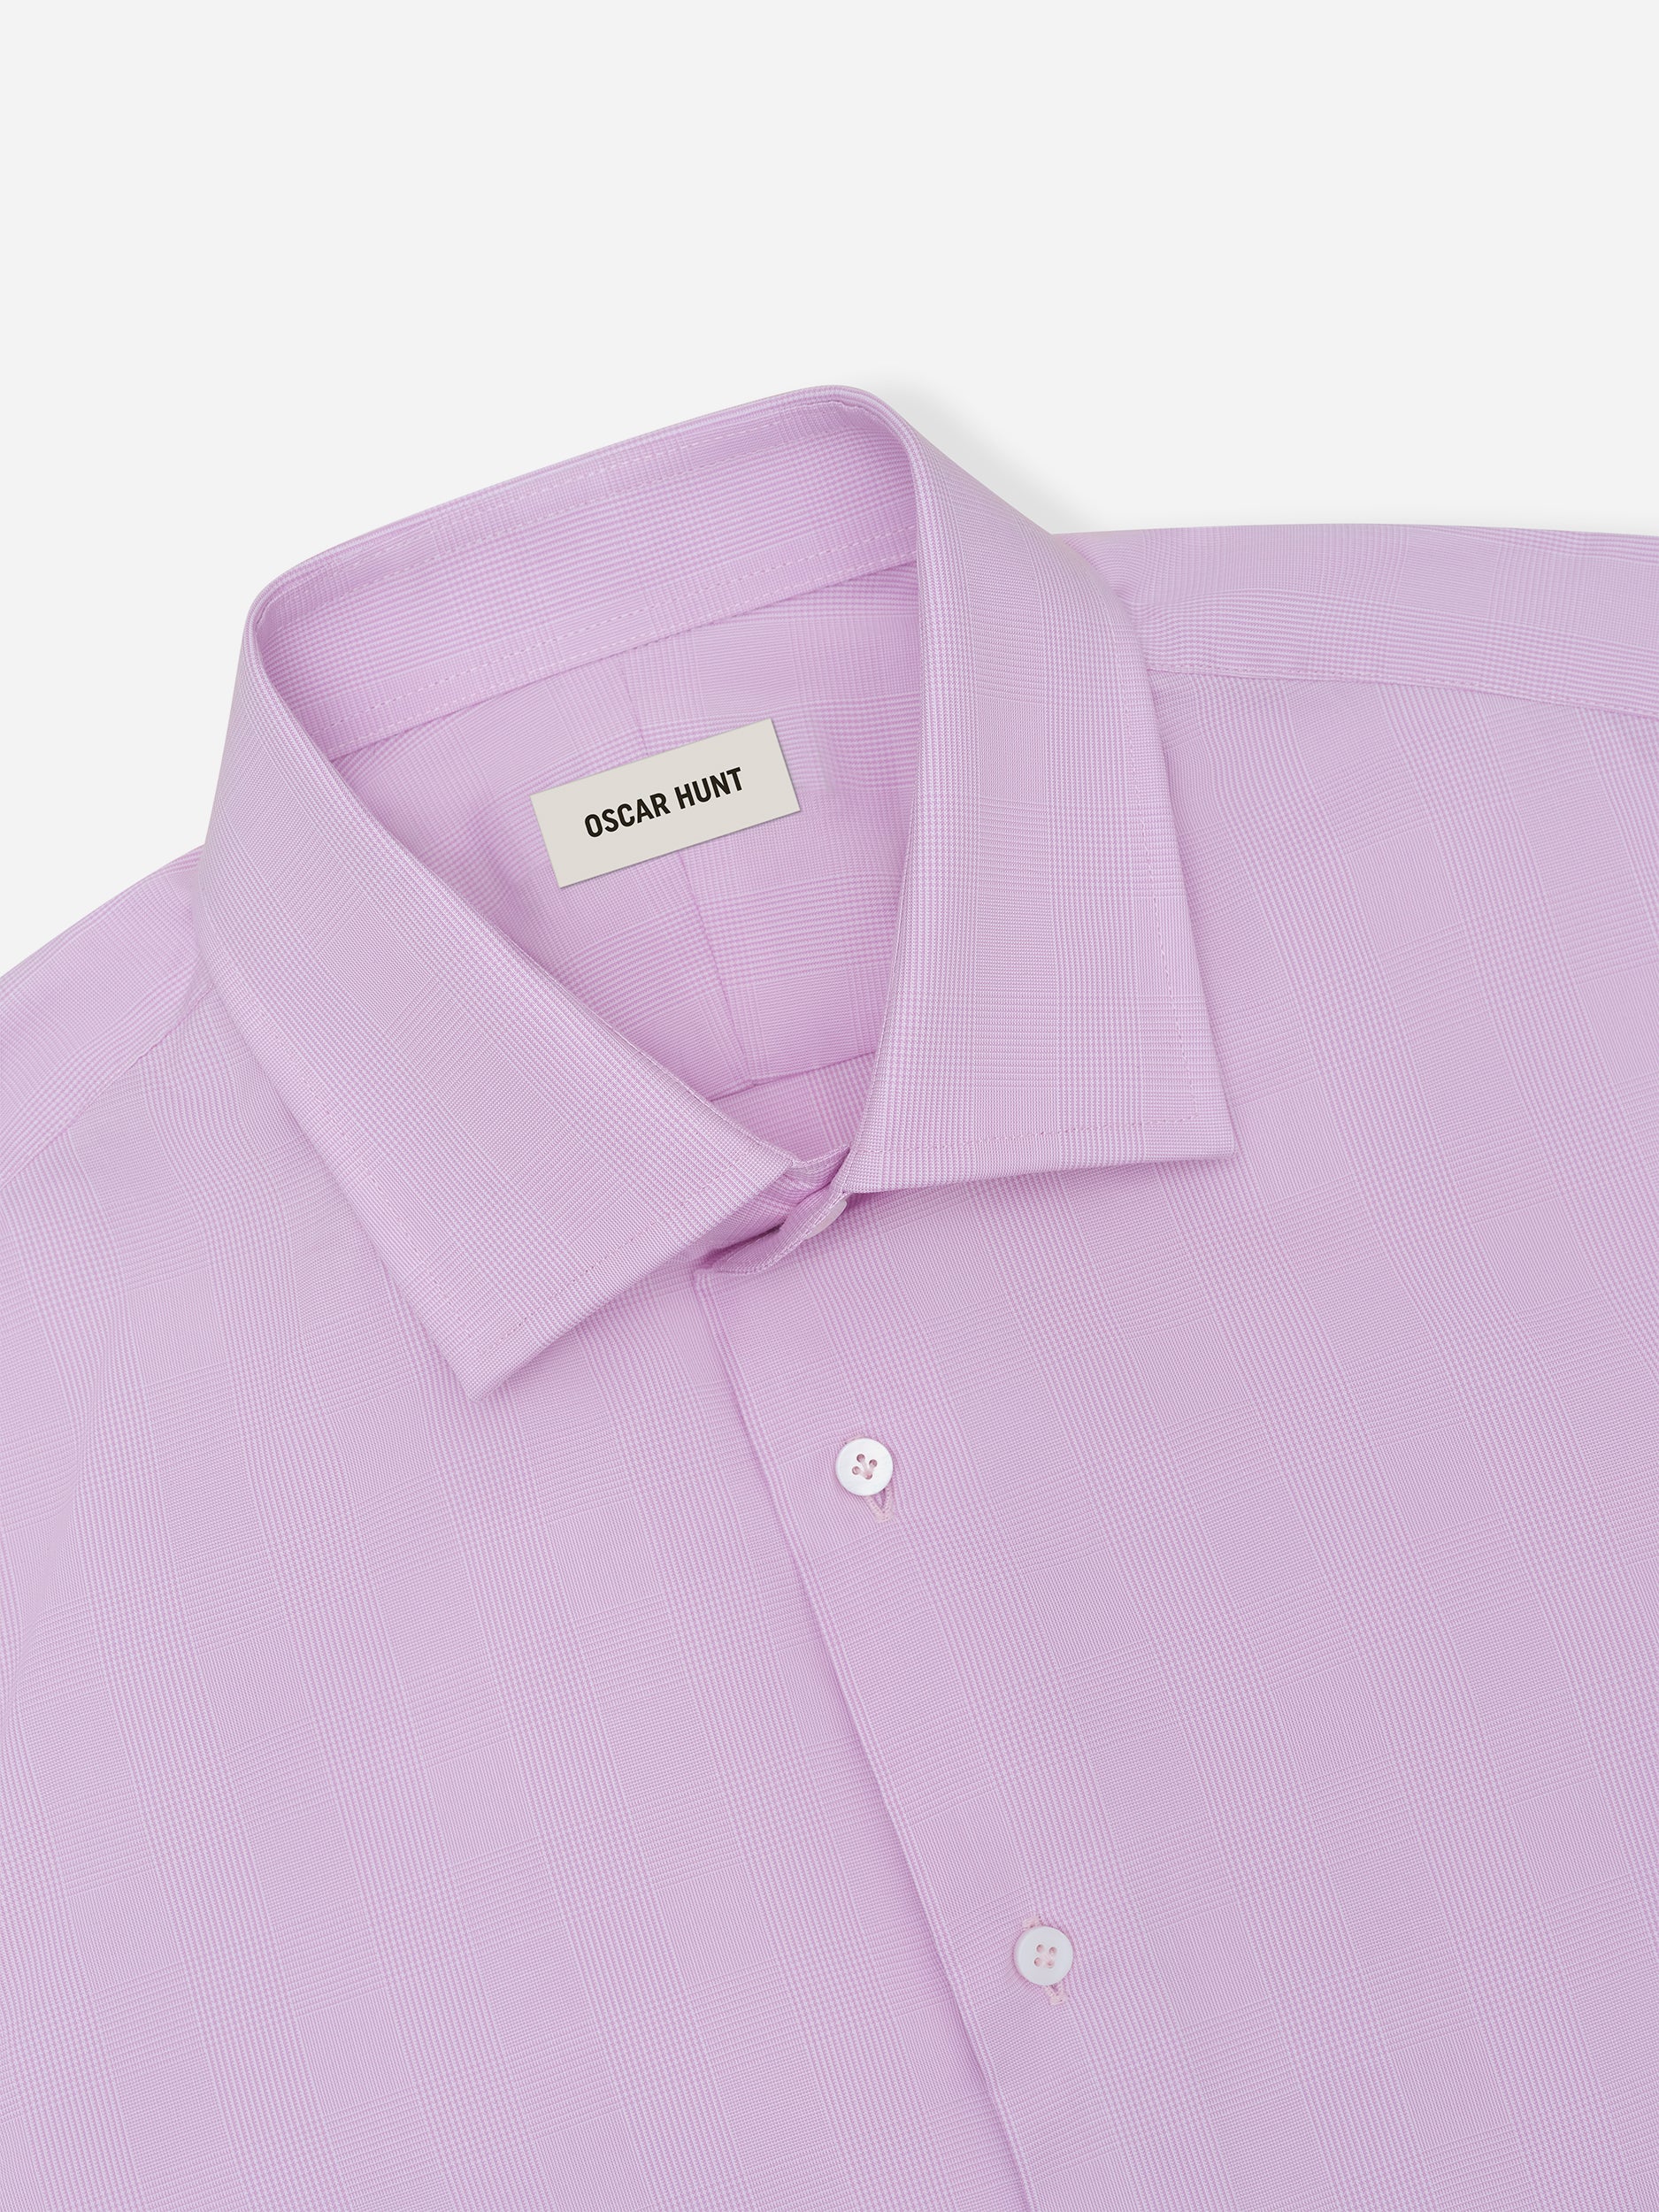 Pink Plaid Cotton Shirt - Oscar Hunt